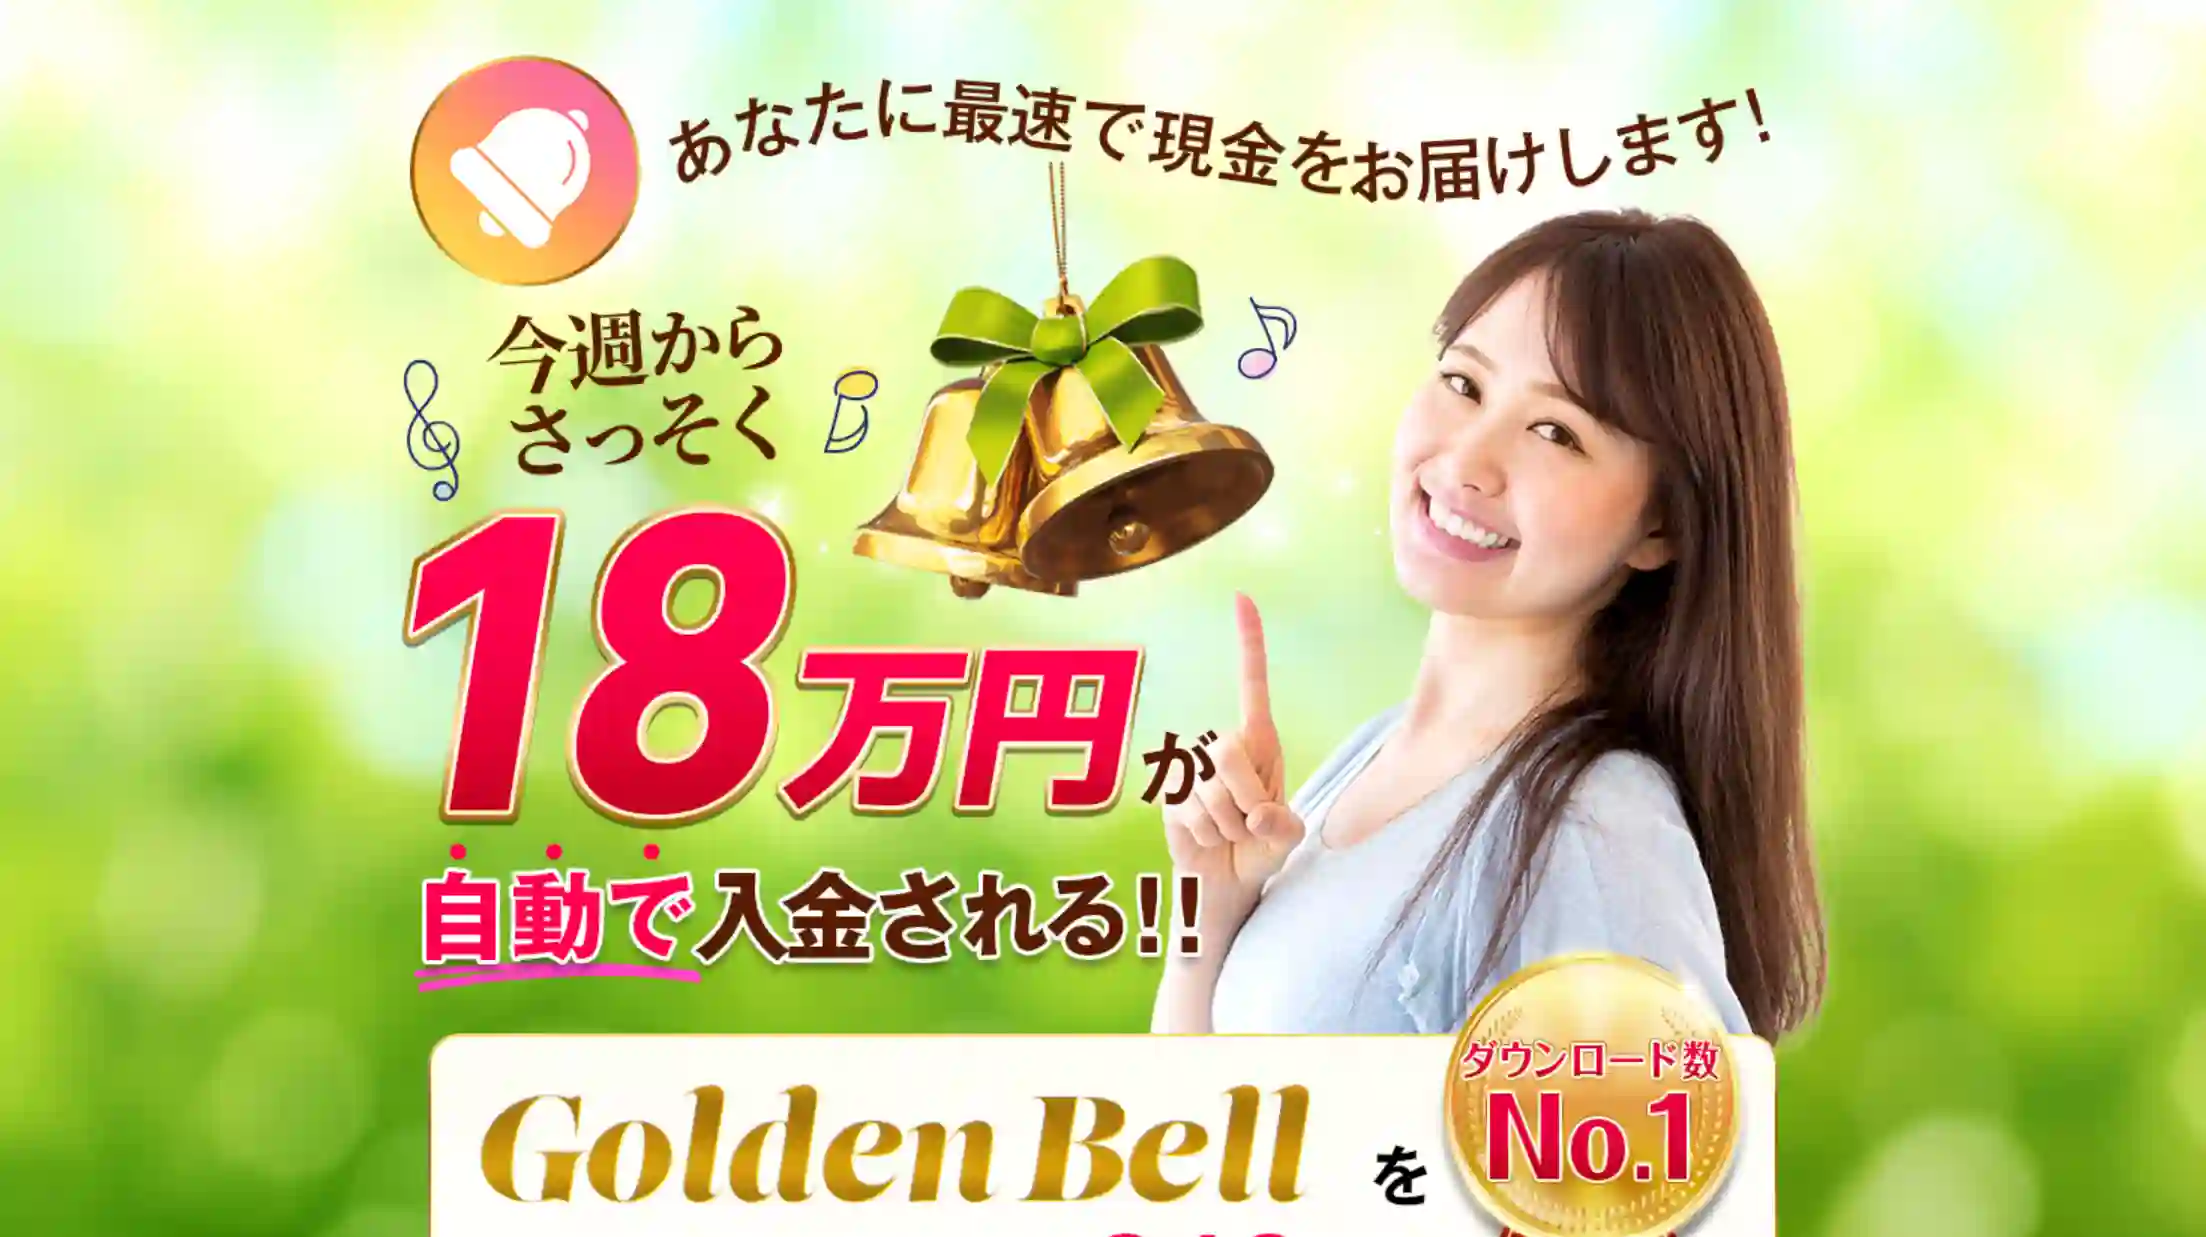 Golden-Bell(ゴールデンベル)